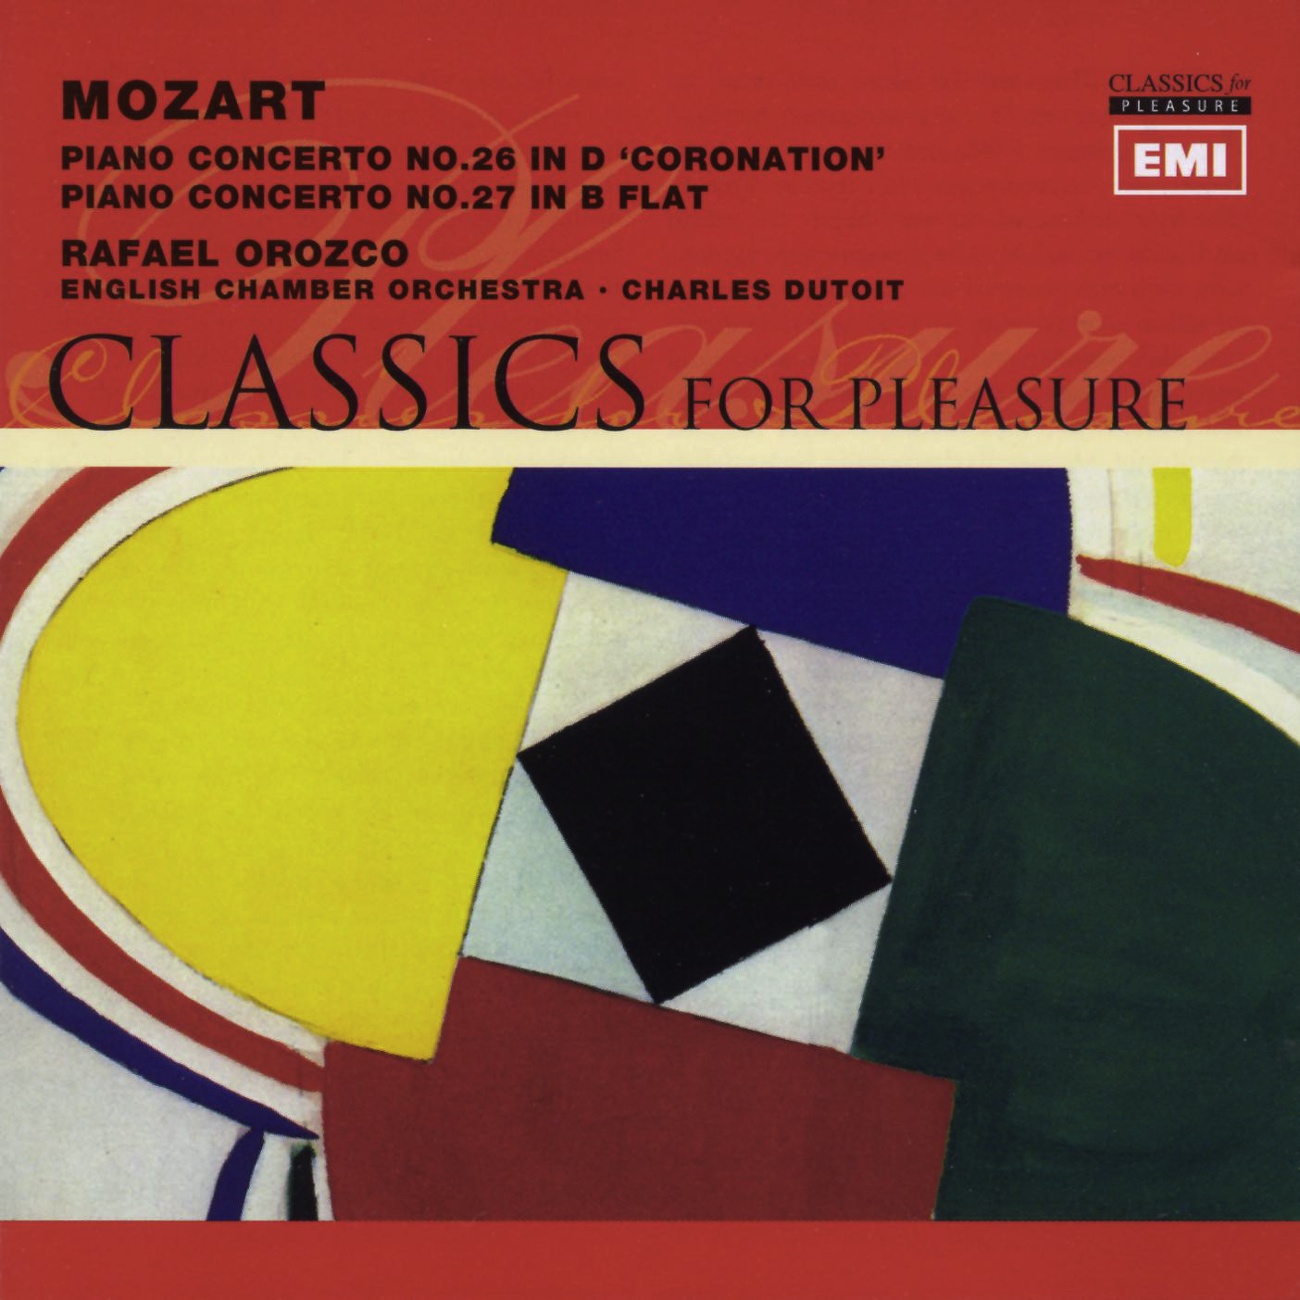 Piano Concerto No. 26 in D K537 'Coronation' (1981 Digital Remaster): I.       Allegro